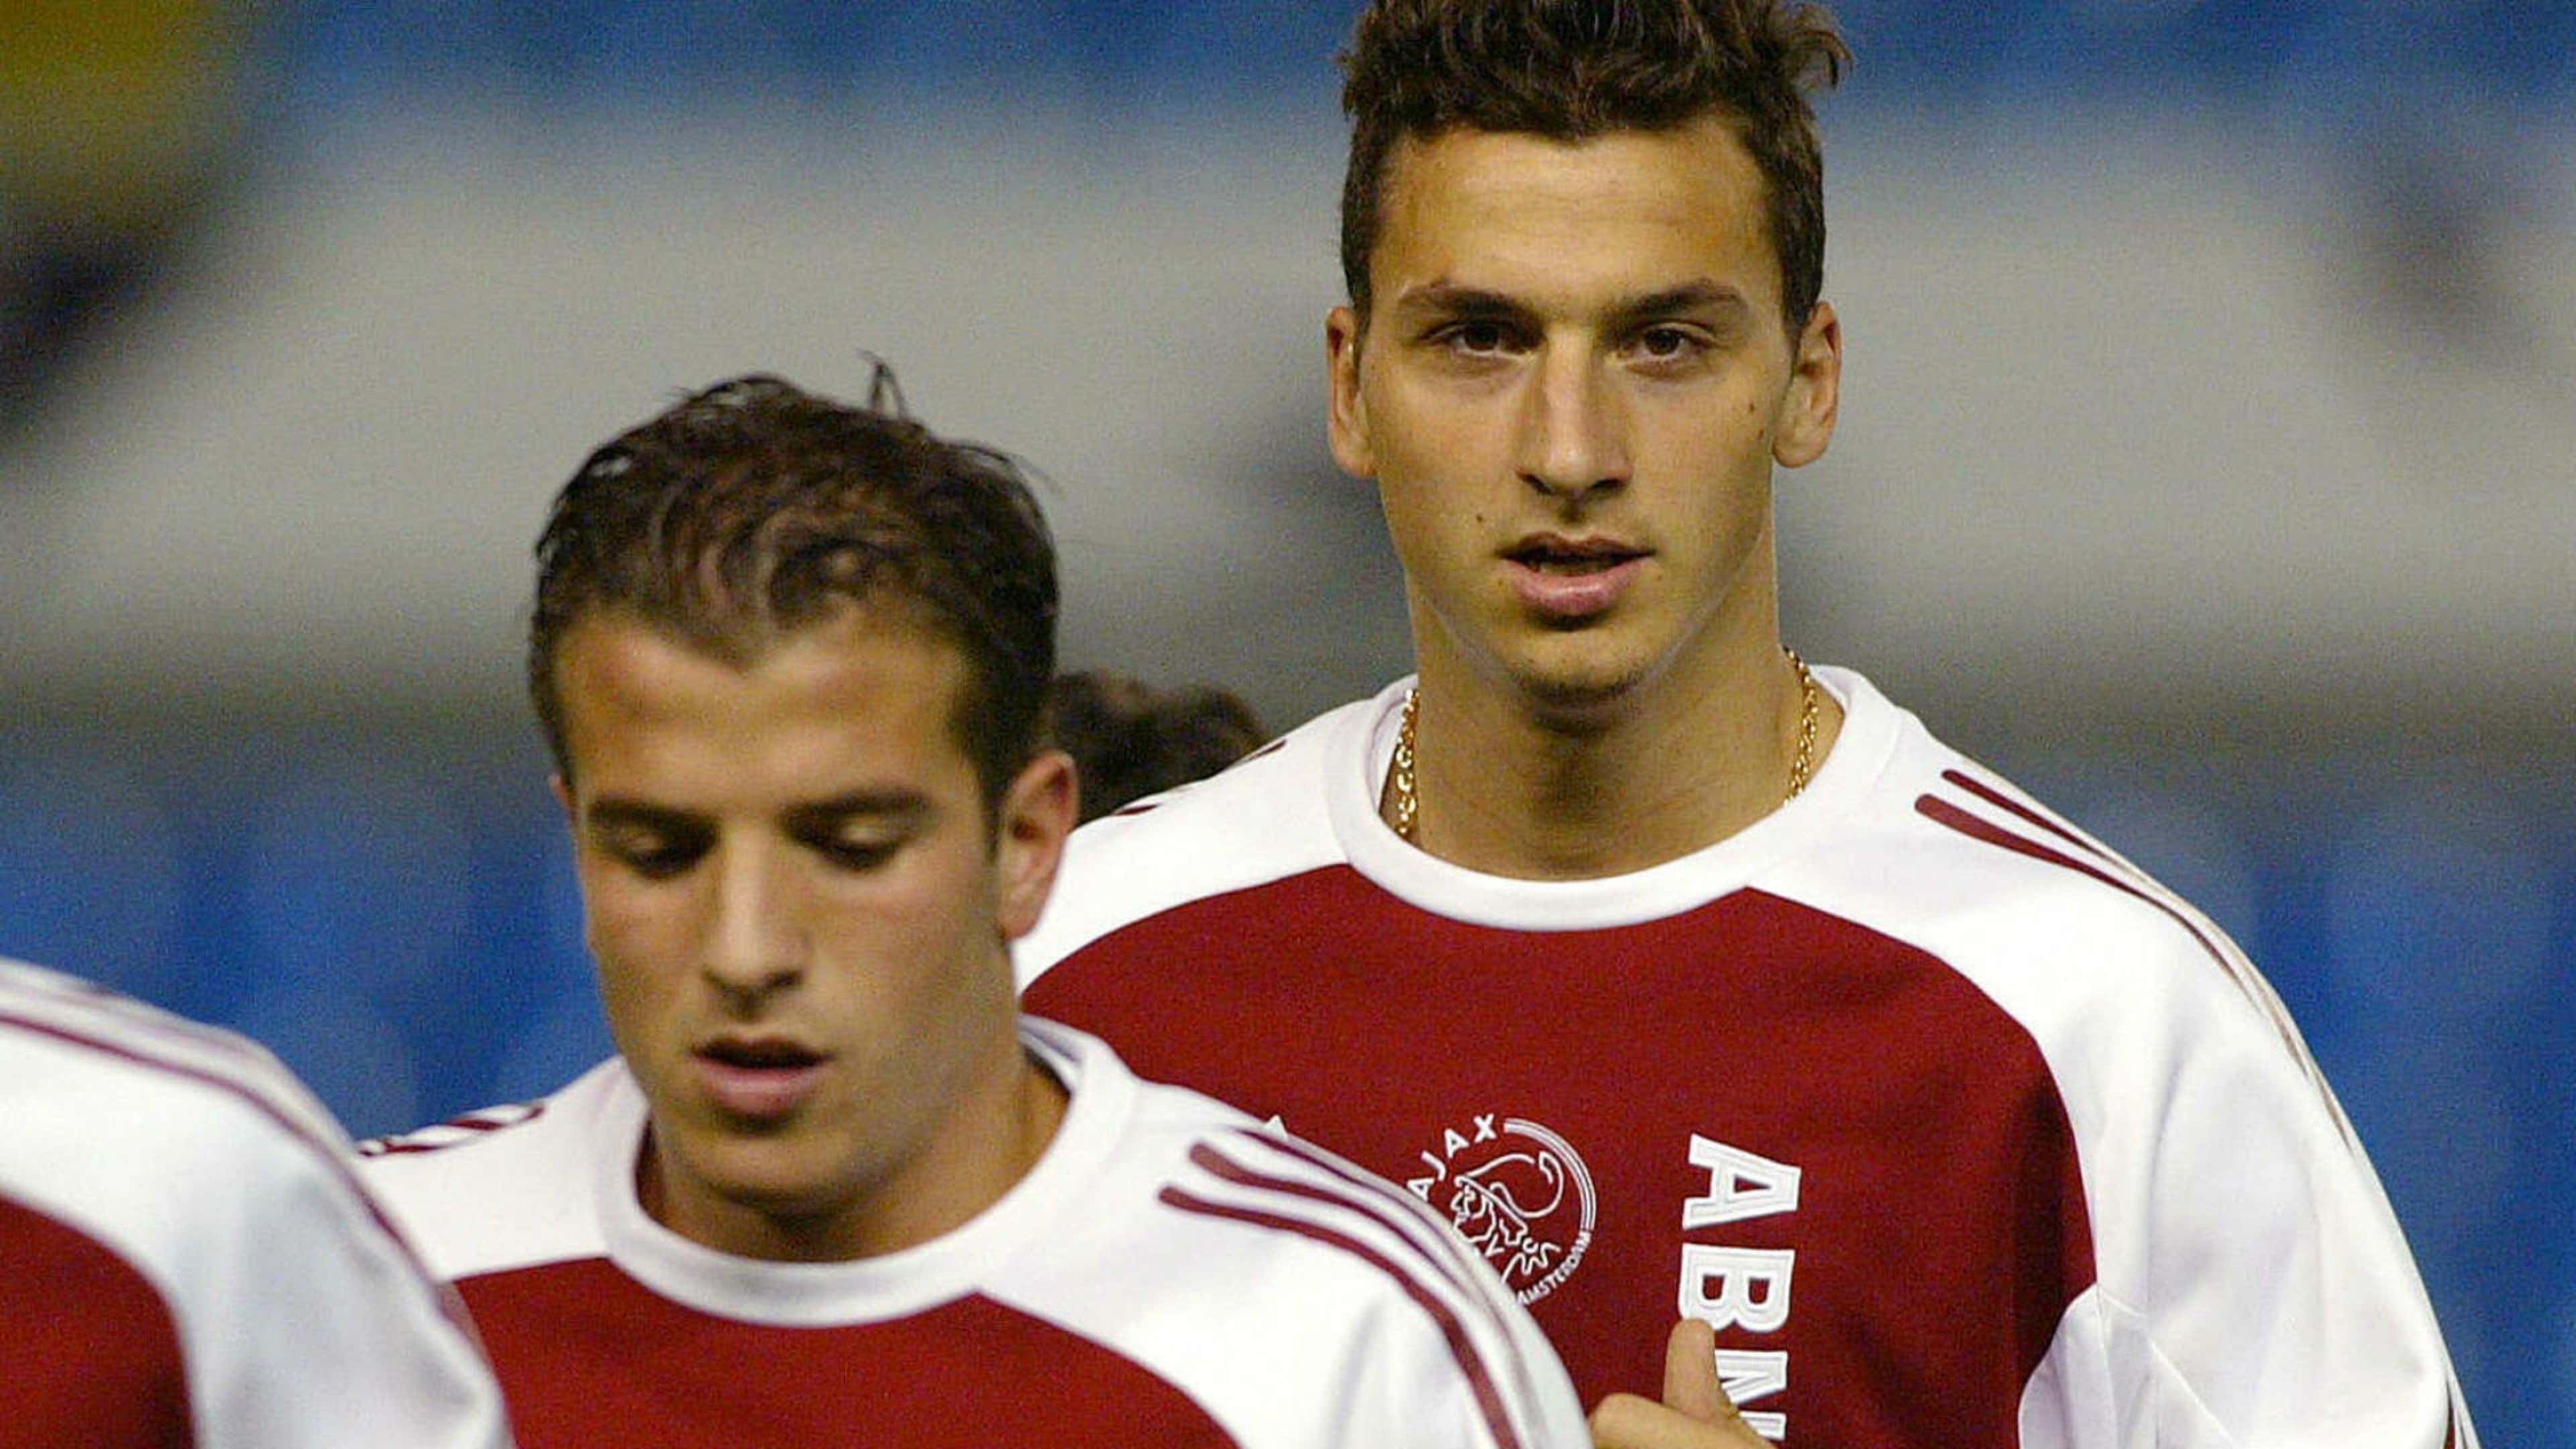 He was a bit jealous!' - Rafael van der Vaart lifts lid on rift with Zlatan Ibrahimovic | Goal.com